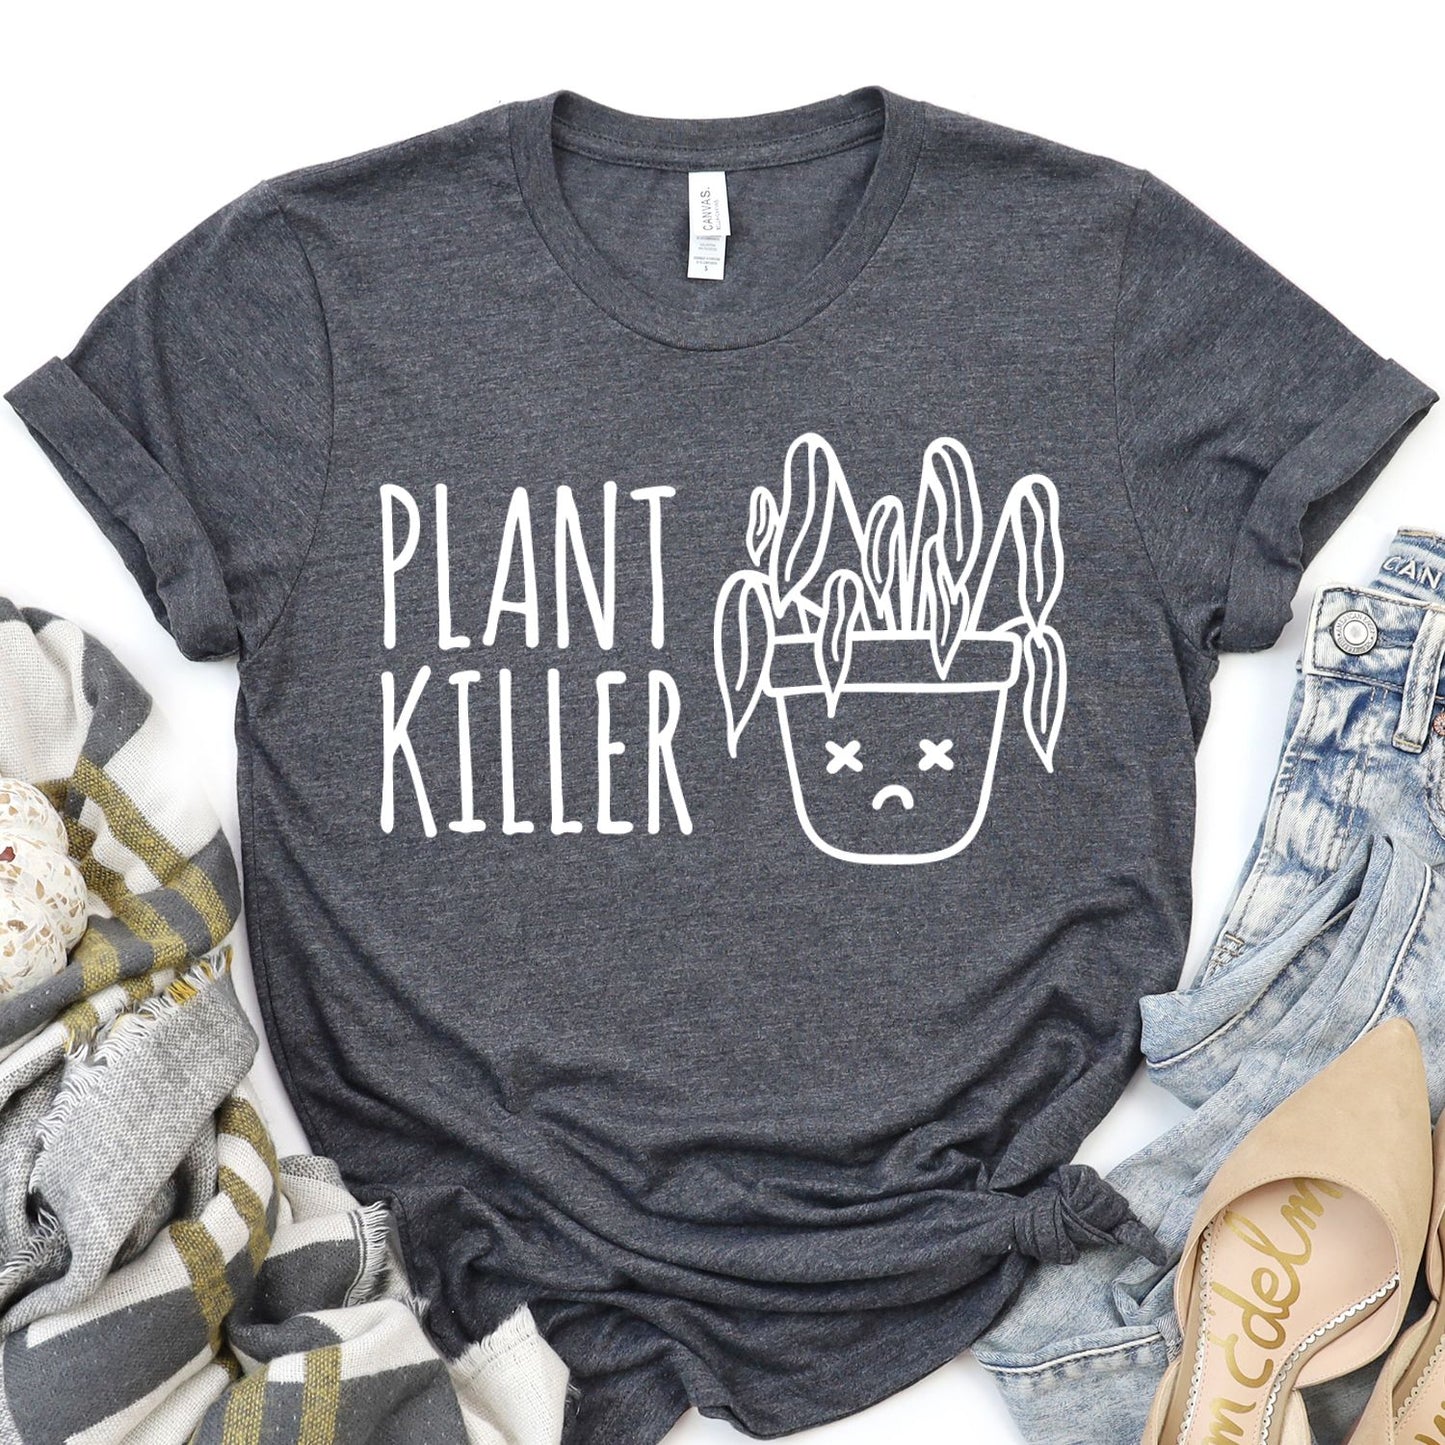 Plant Killer